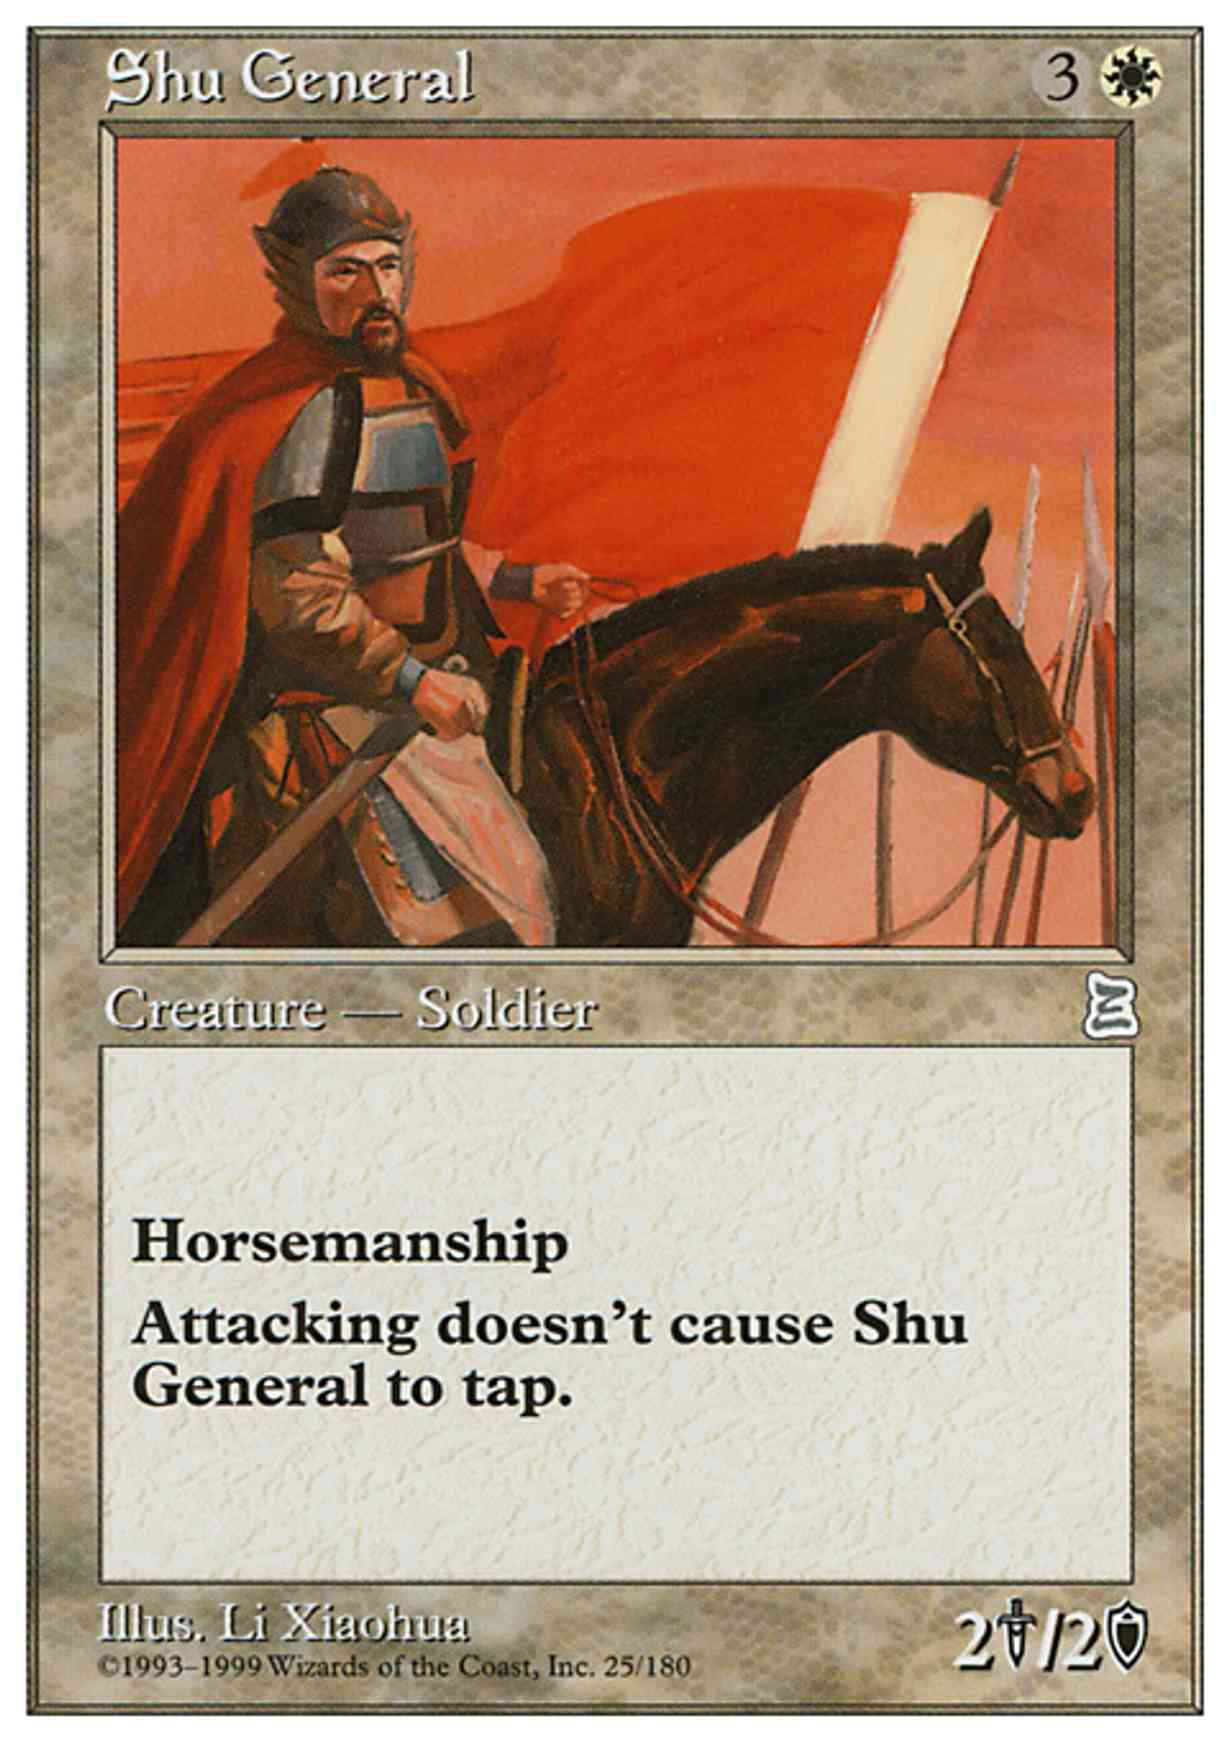 Shu General magic card front